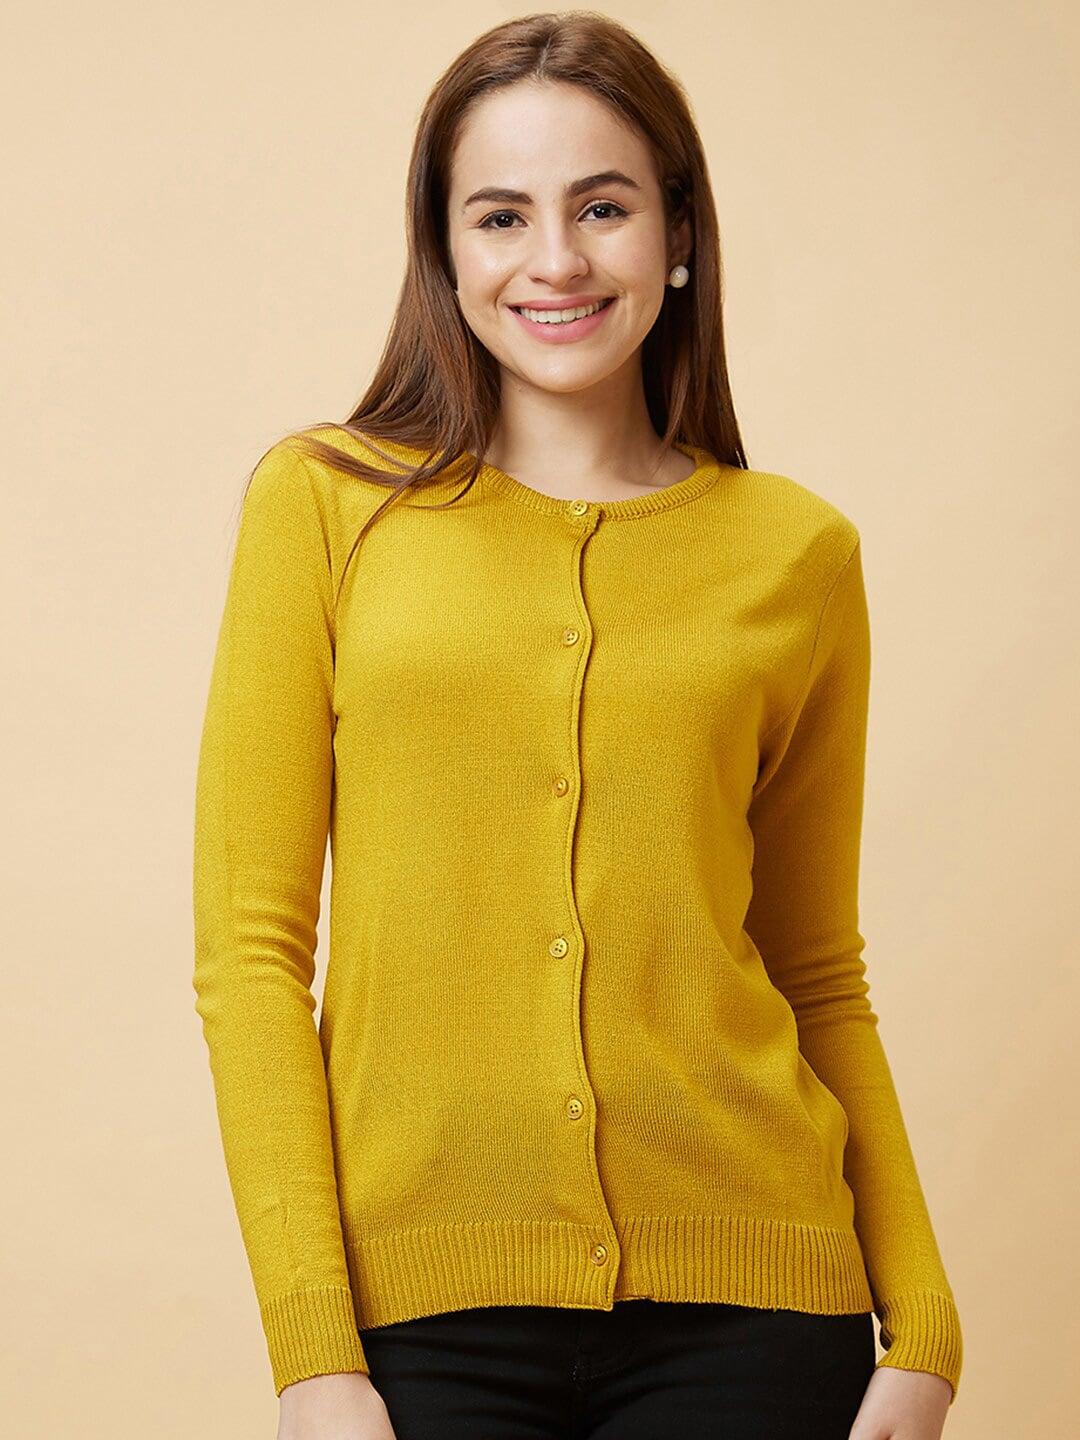 globus mustard round neck long sleeves acrylic cardigan sweater